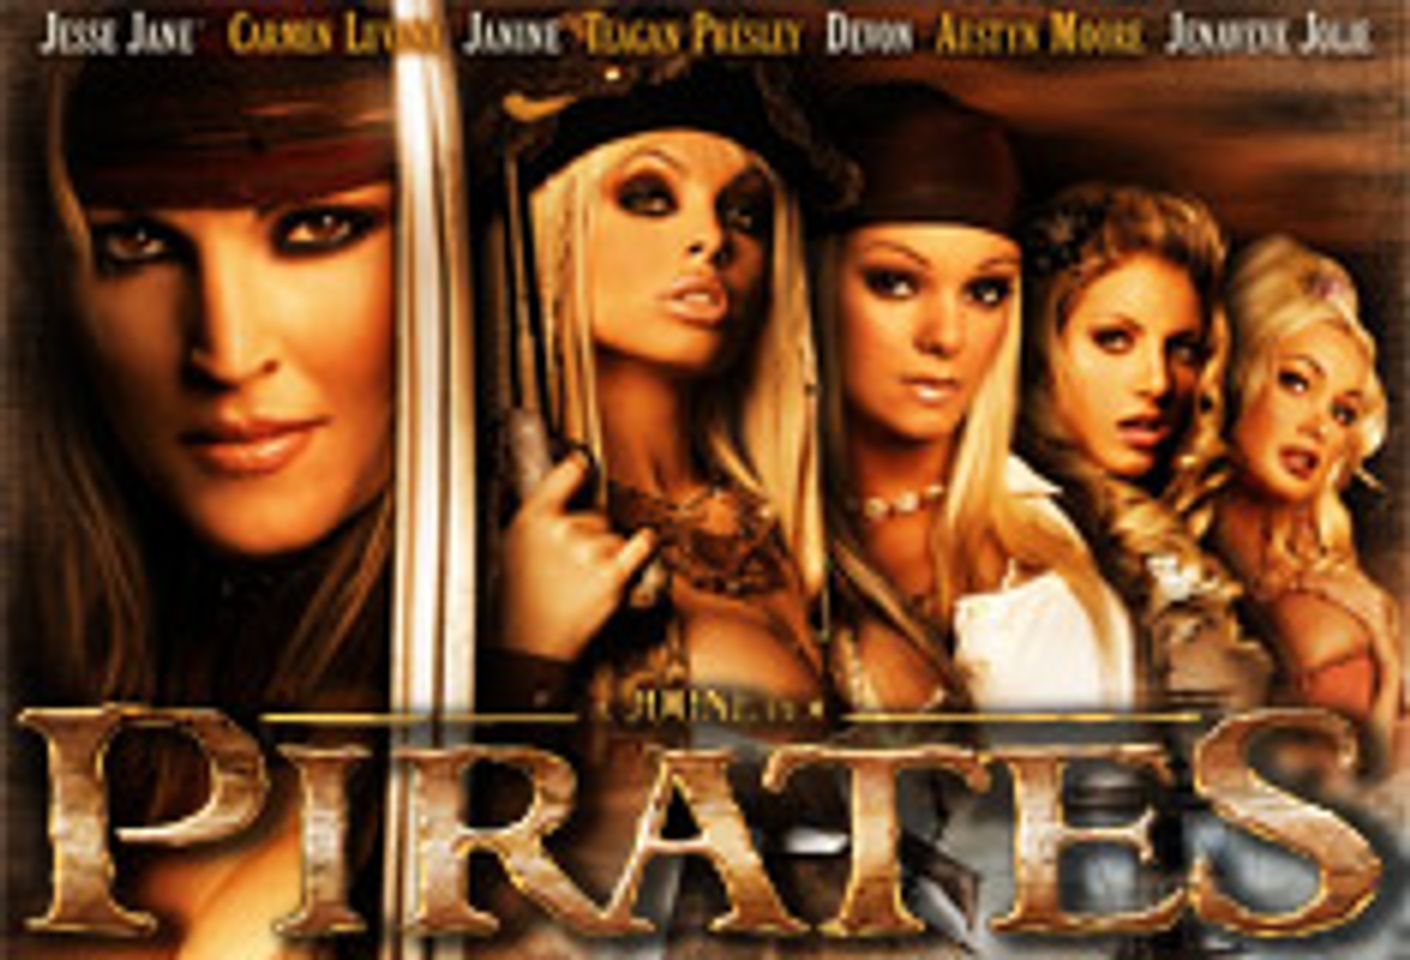 <i>Pirates</i> Tops in '05 on DVD Talk